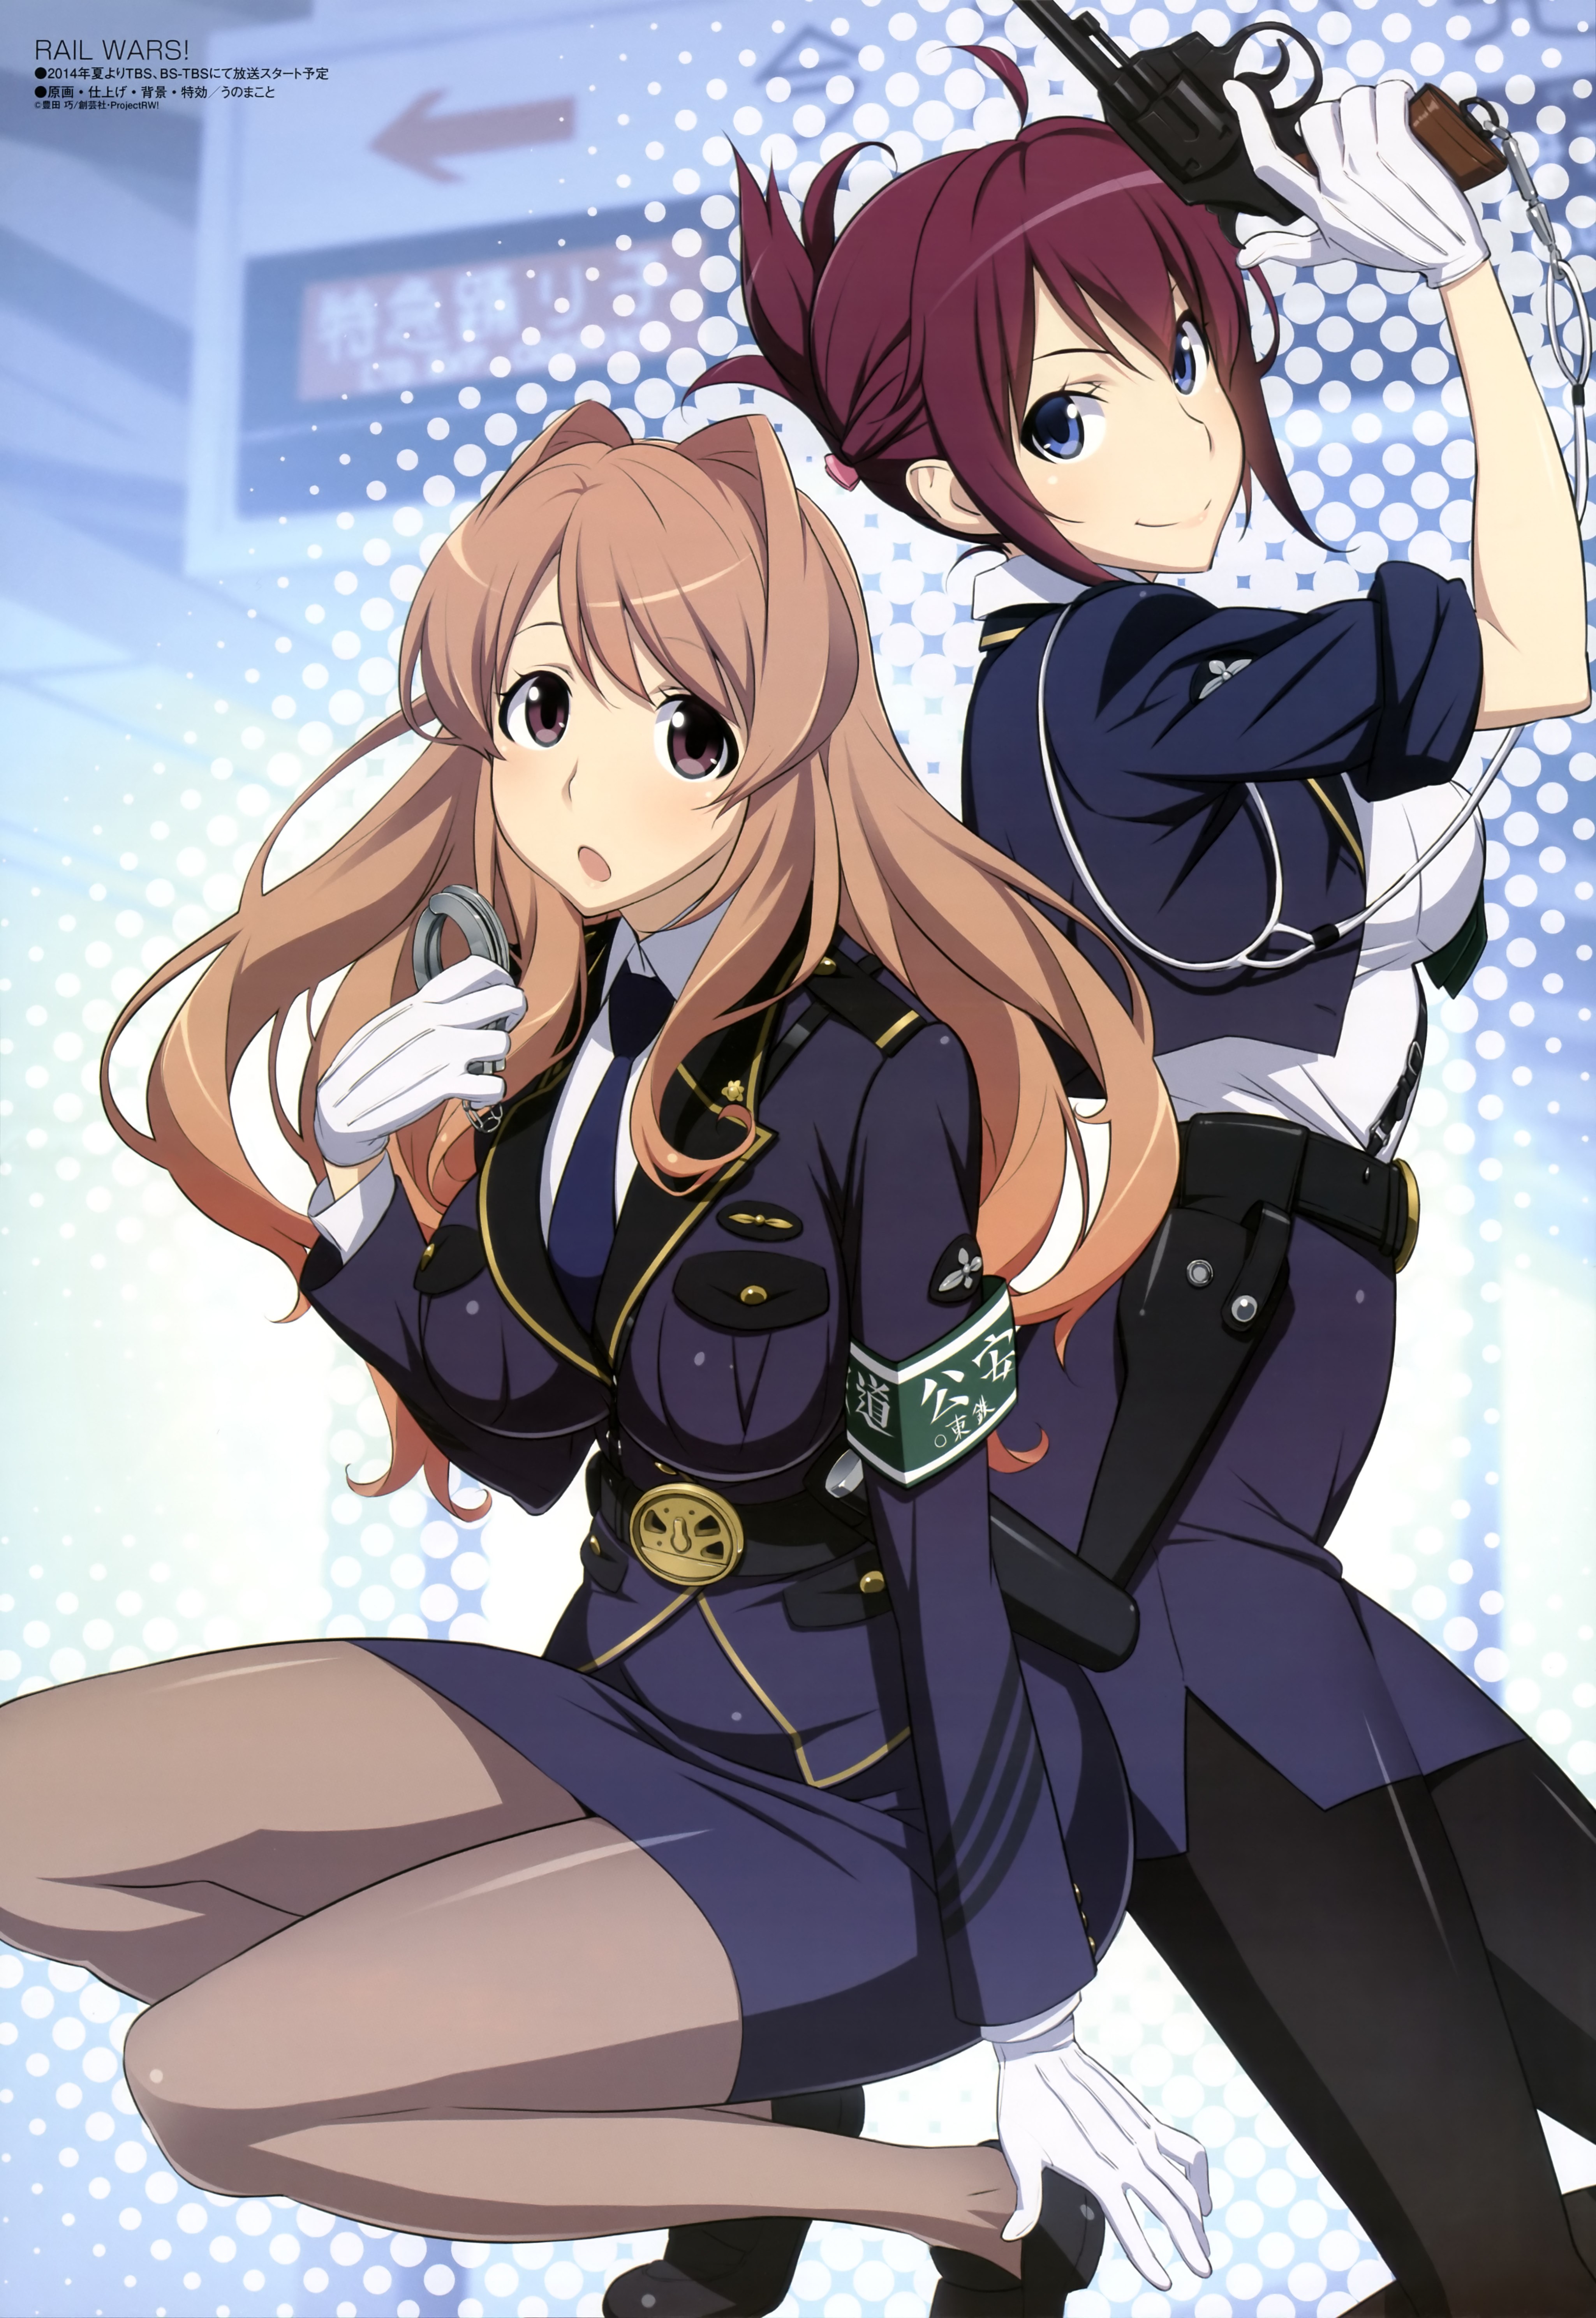 Anime 4098x5951 anime Rail Wars anime girls long hair short hair Koumi Haruka Sakurai Aoi two women squatting girls with guns handcuffs